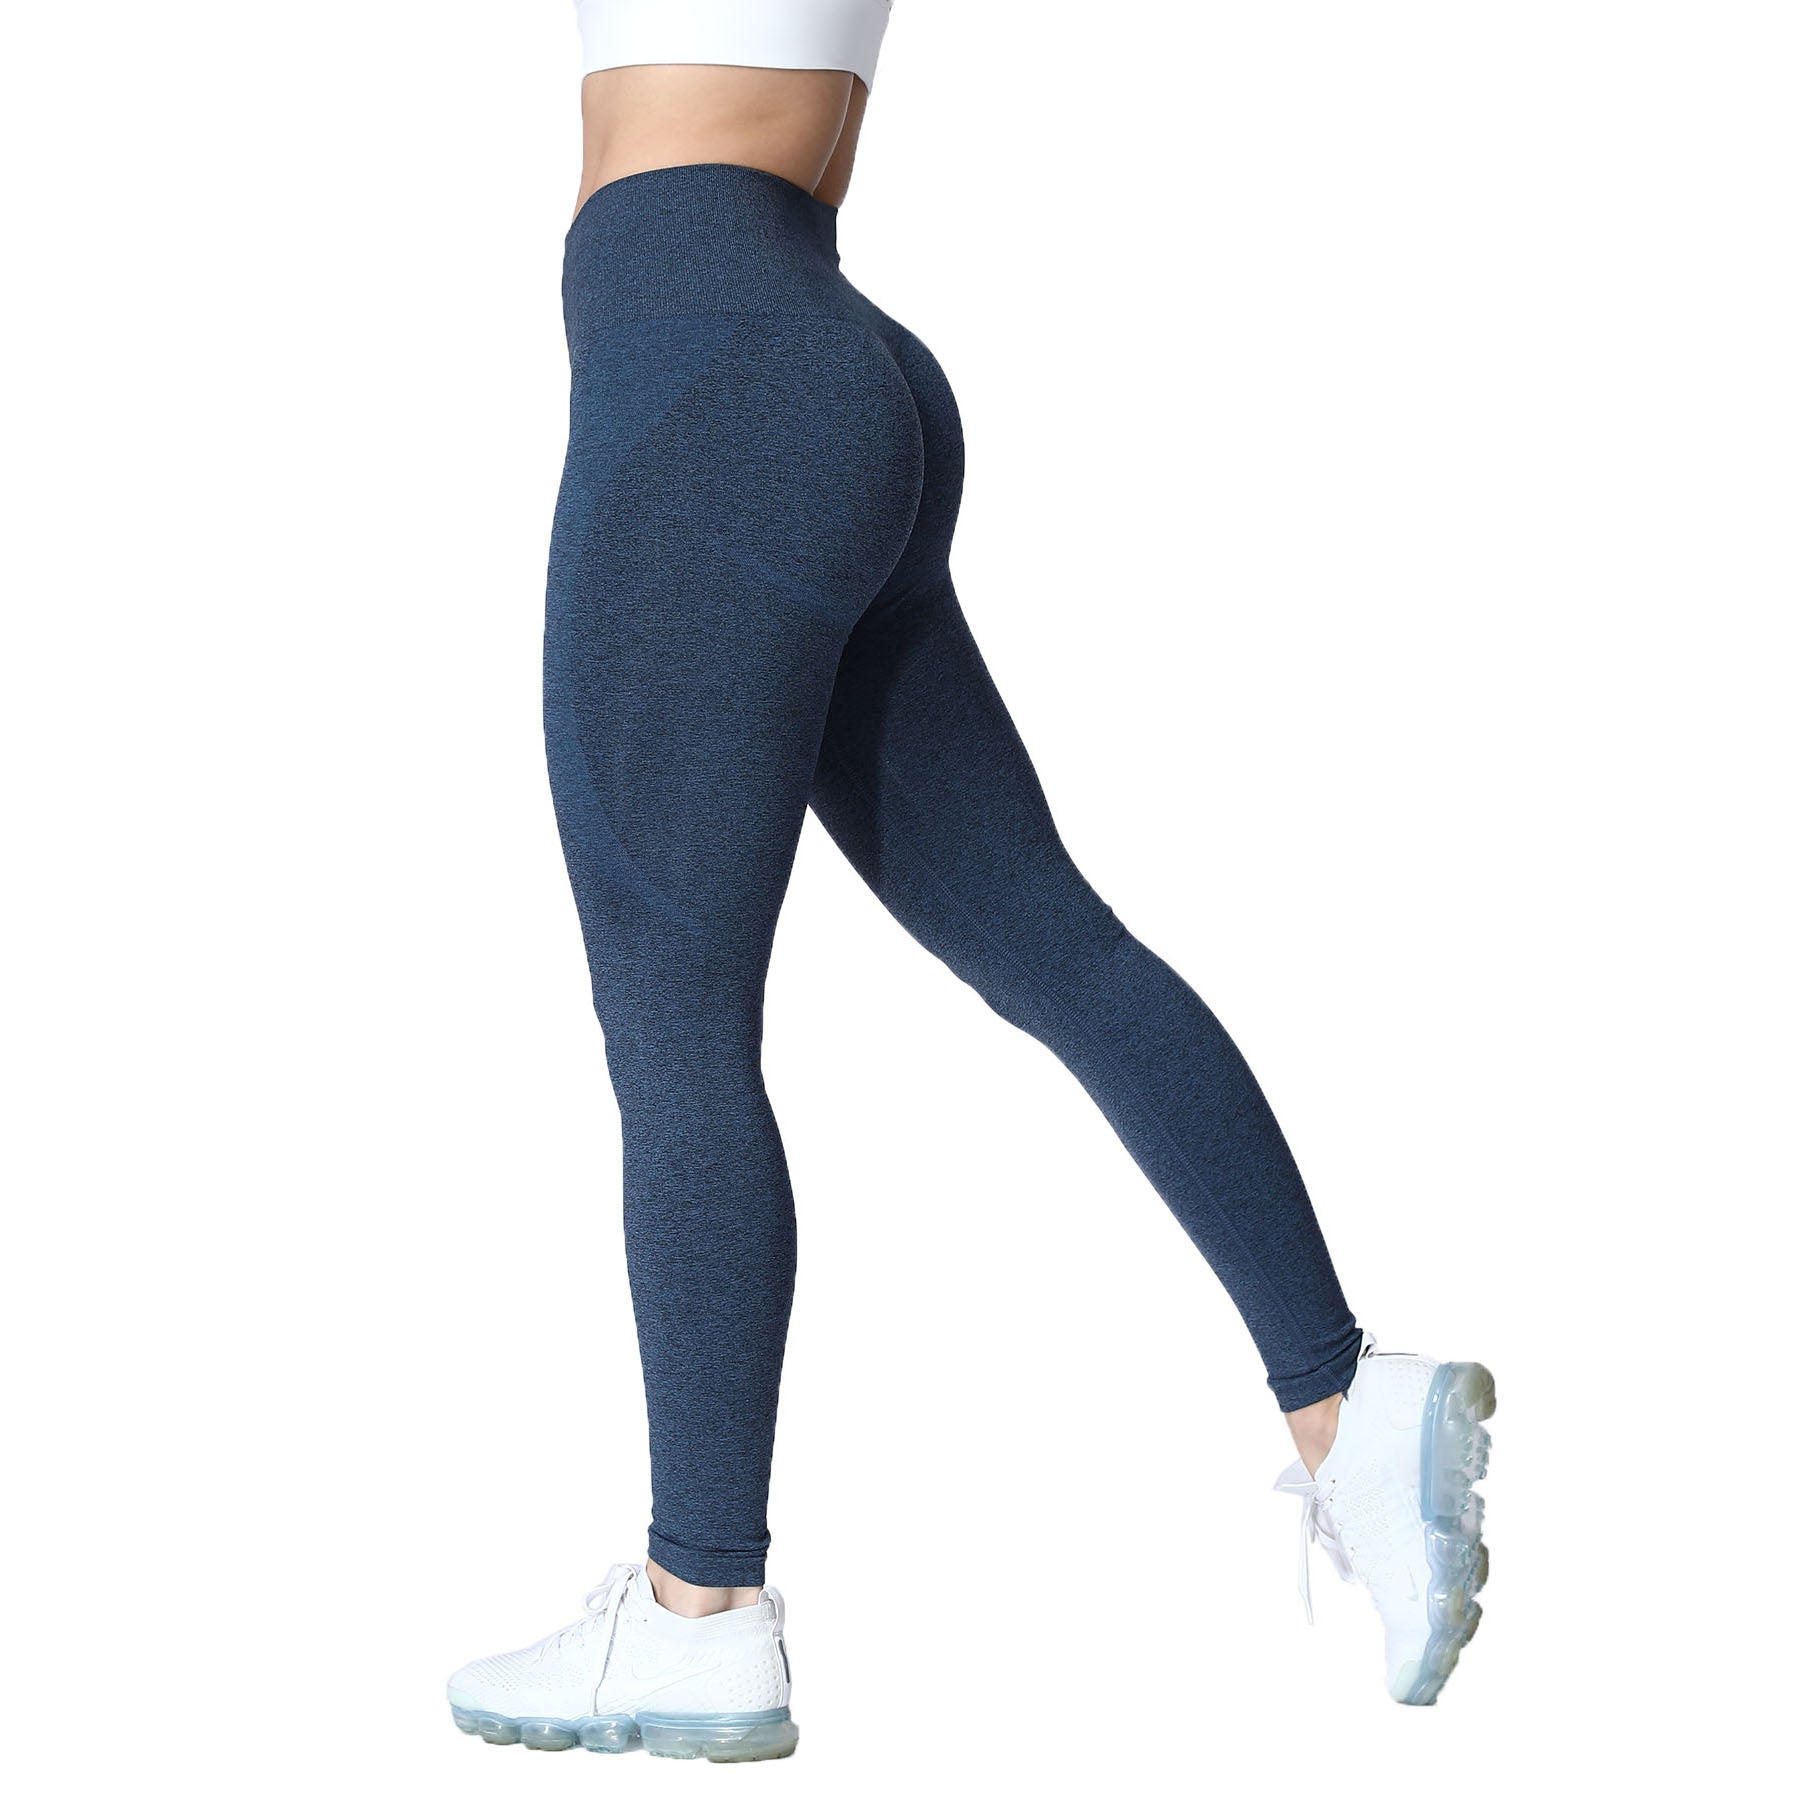  Aoxjox Women's High Waist Workout Gym Vital Seamless Leggings  Yoga Pants (Navy Marl, X-Small) : Sports & Outdoors